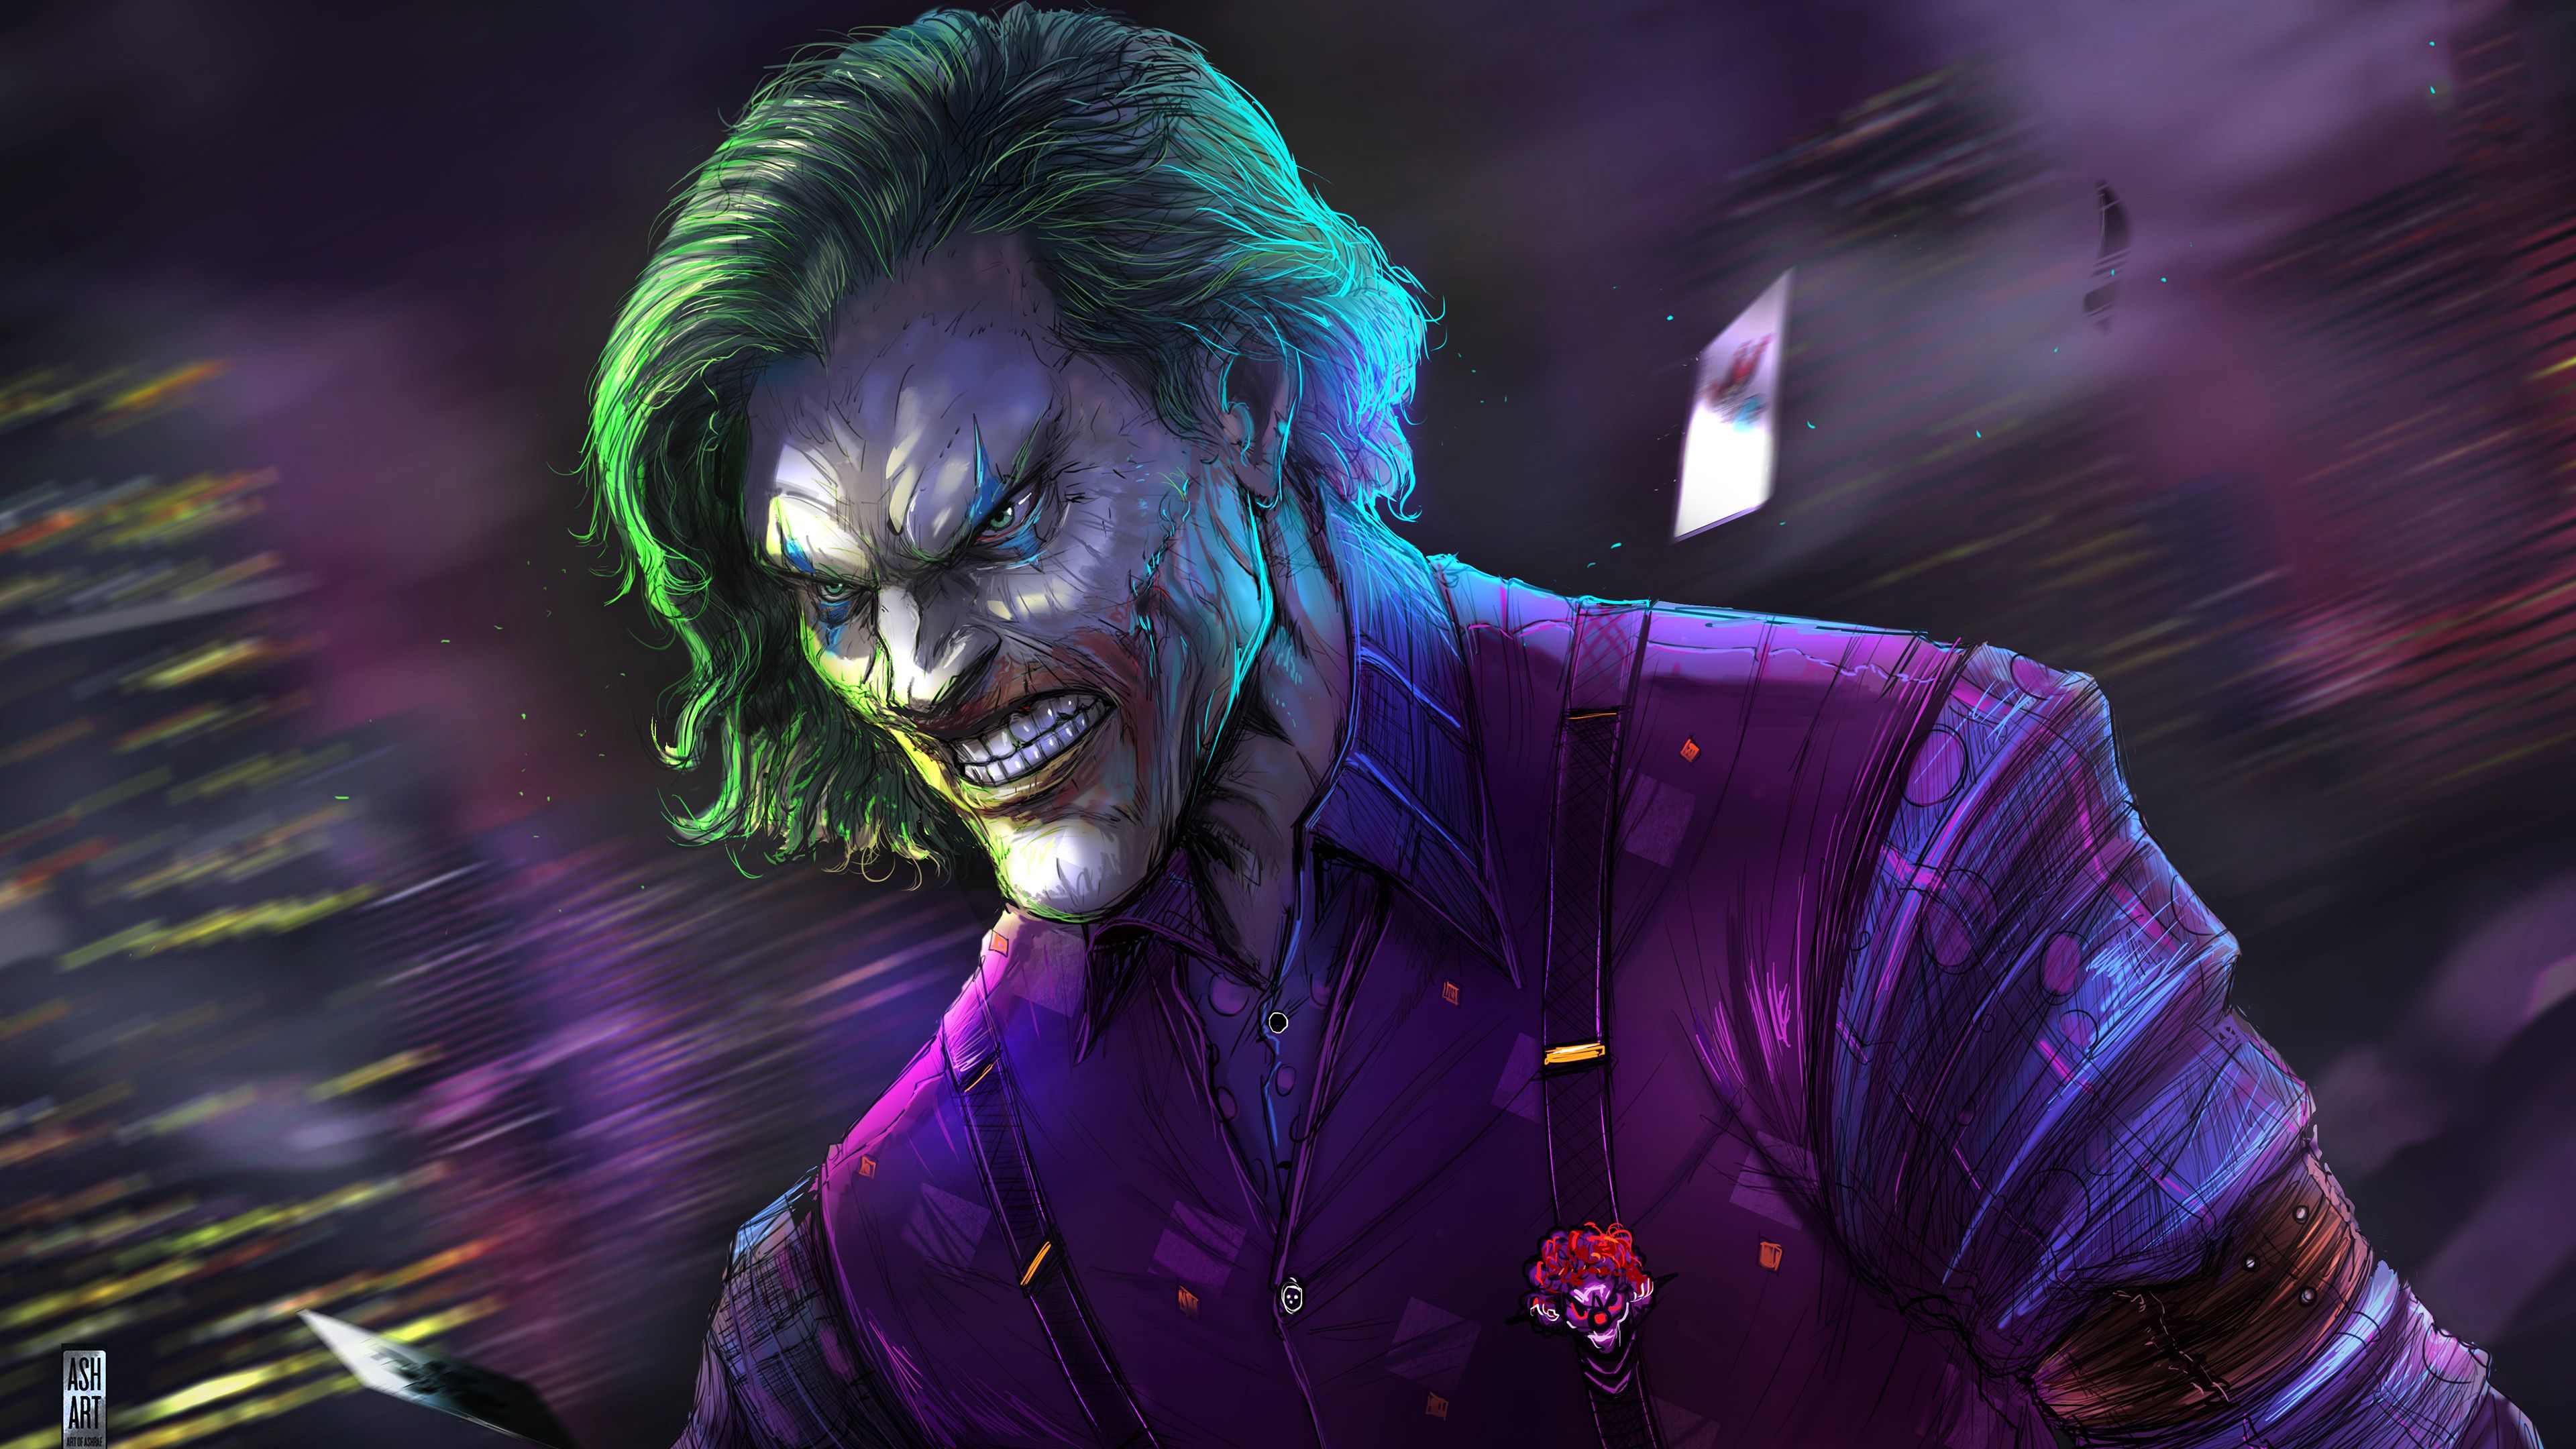 Joker Artwork 4k HD Superheroes, 4k Wallpaper, Image, Background, Photo and Picture